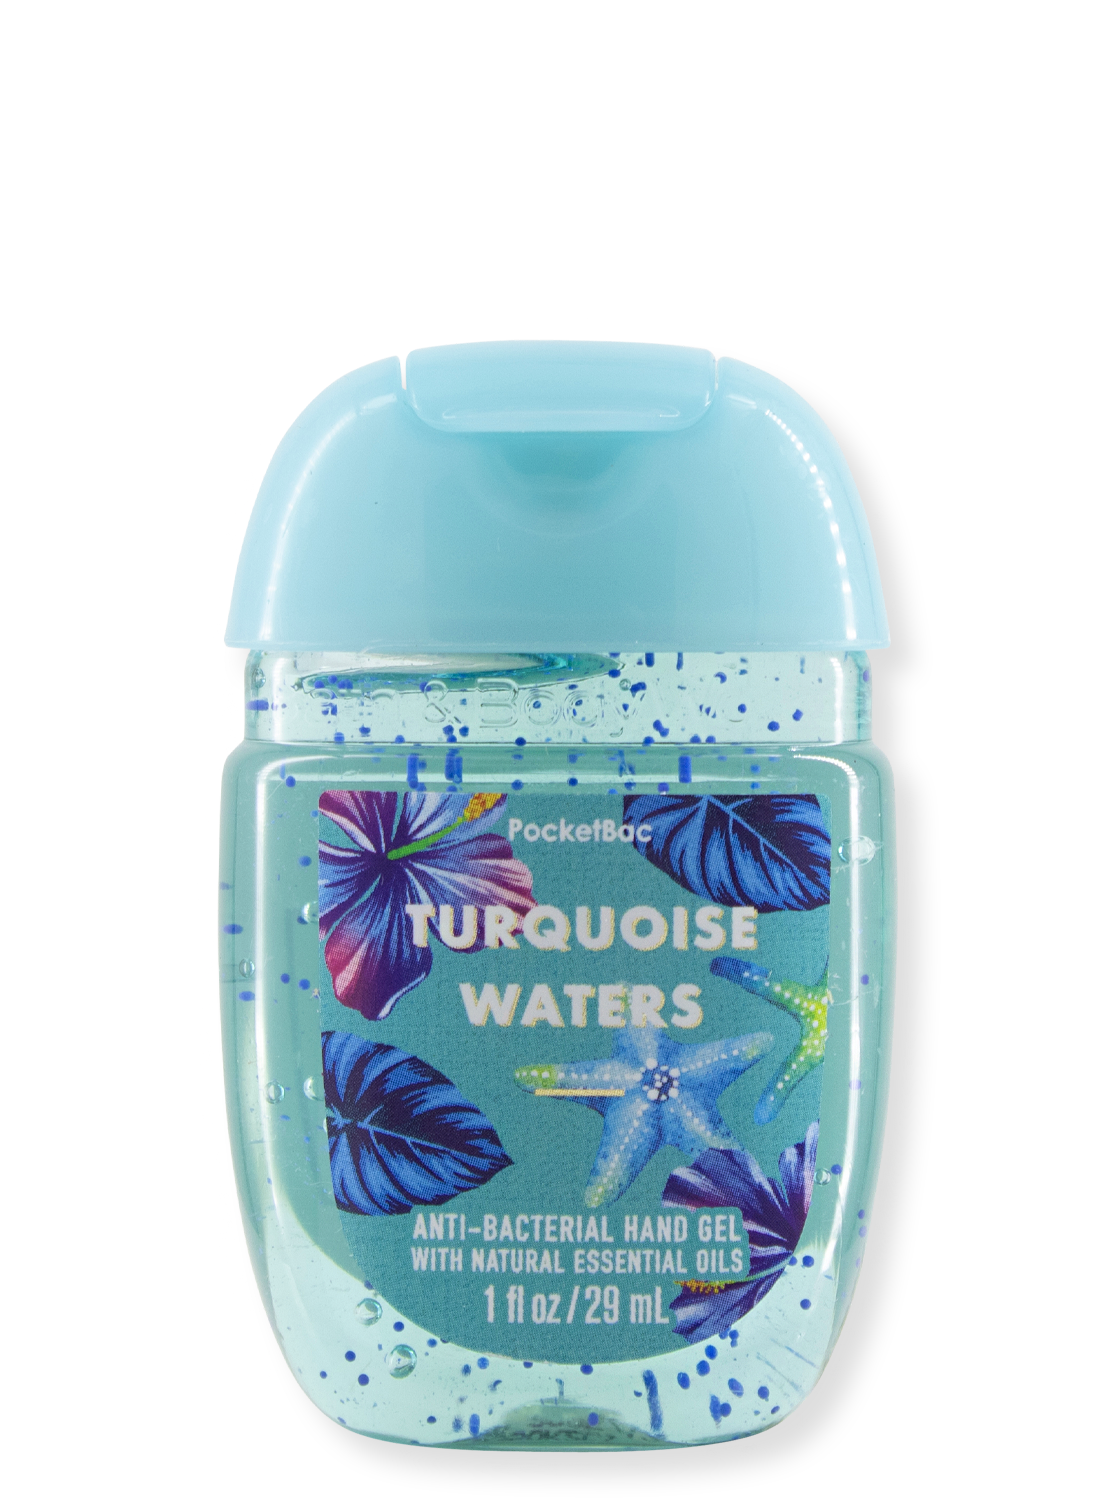 Hand-Desinfektionsgel - Turquoise Waters - 29ml